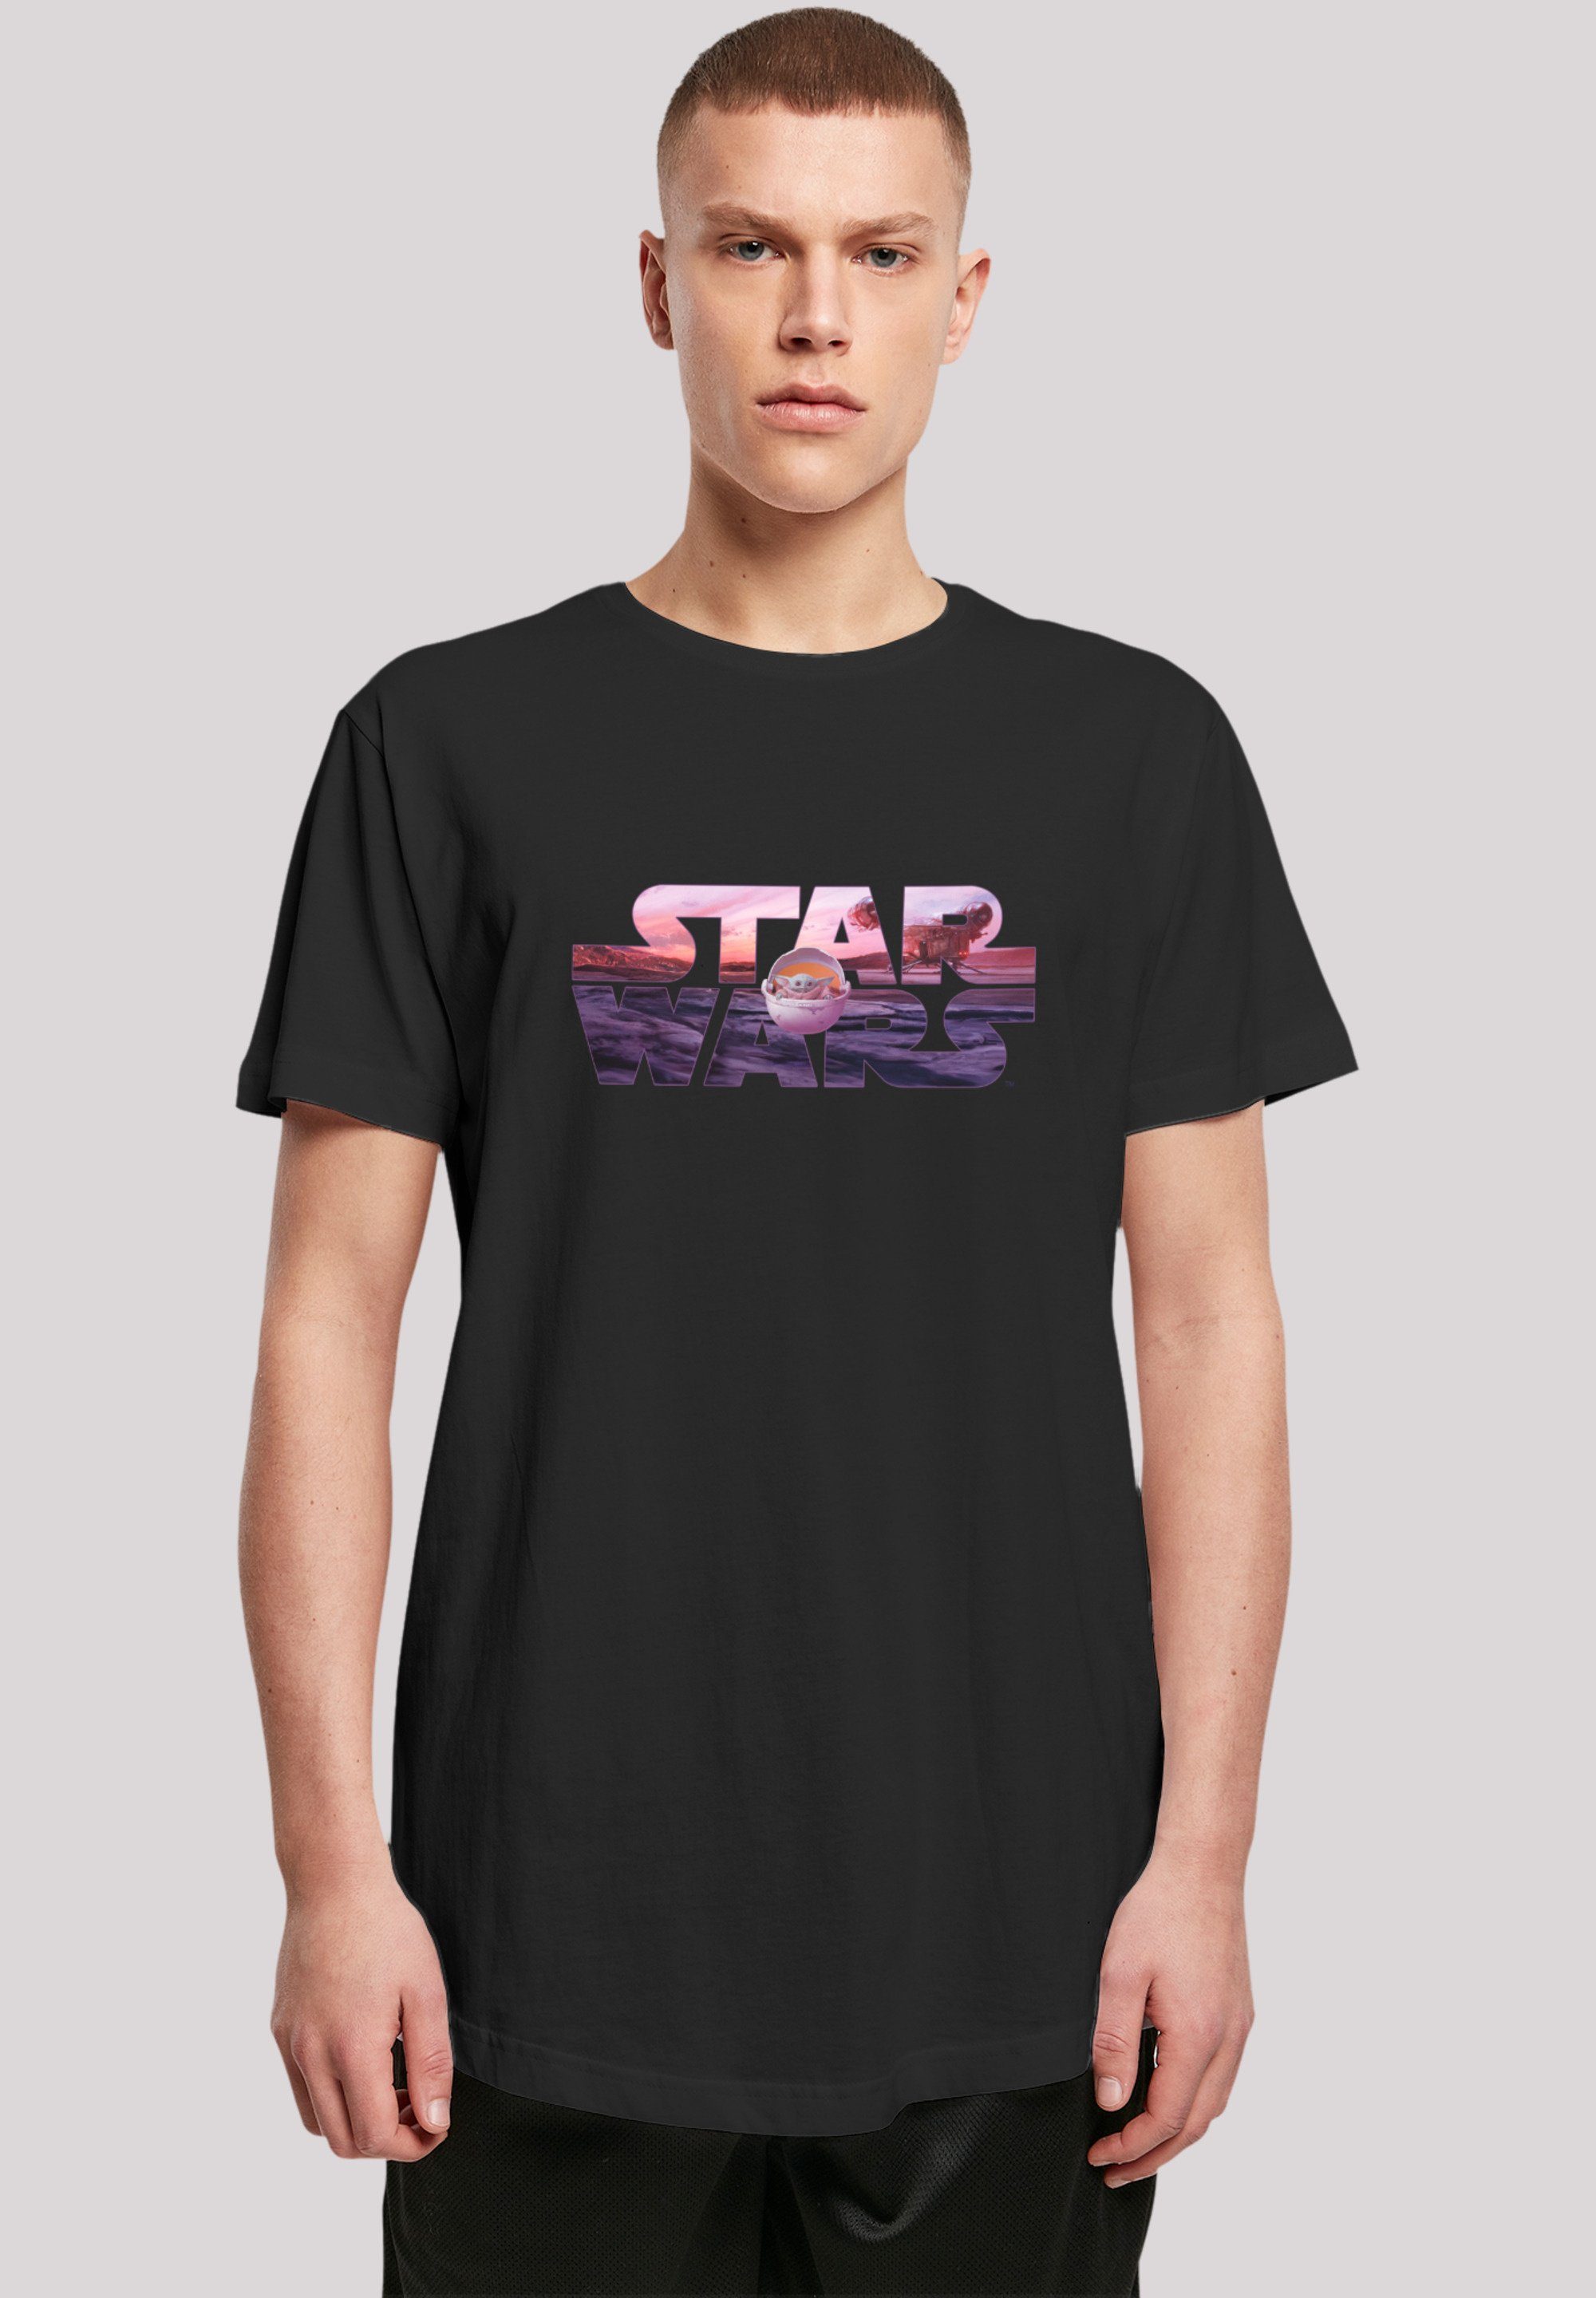 F4NT4STIC T-Shirt Star Wars The Mandalorian Child Ride The Sky Premium  Qualität, Offiziell lizenziertes Star Wars T-Shirt